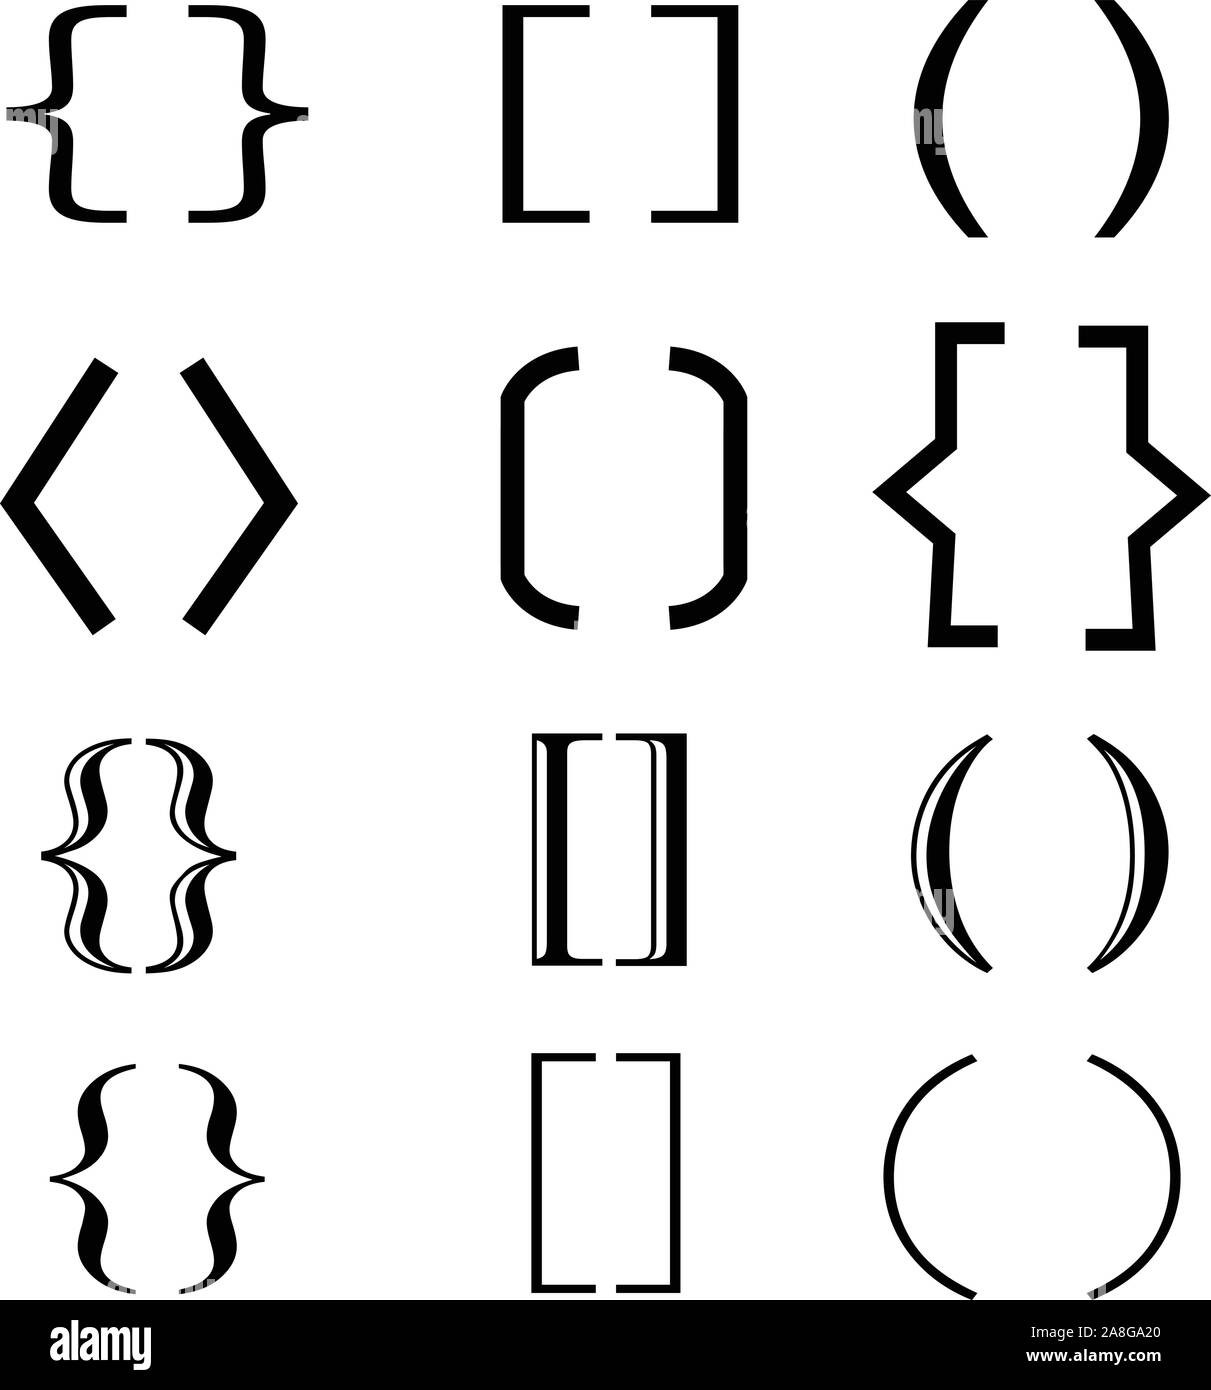 Symbol Für Geschweifte Klammer, Klammern Vektor Art Illustration  Stock-Vektorgrafik - Alamy